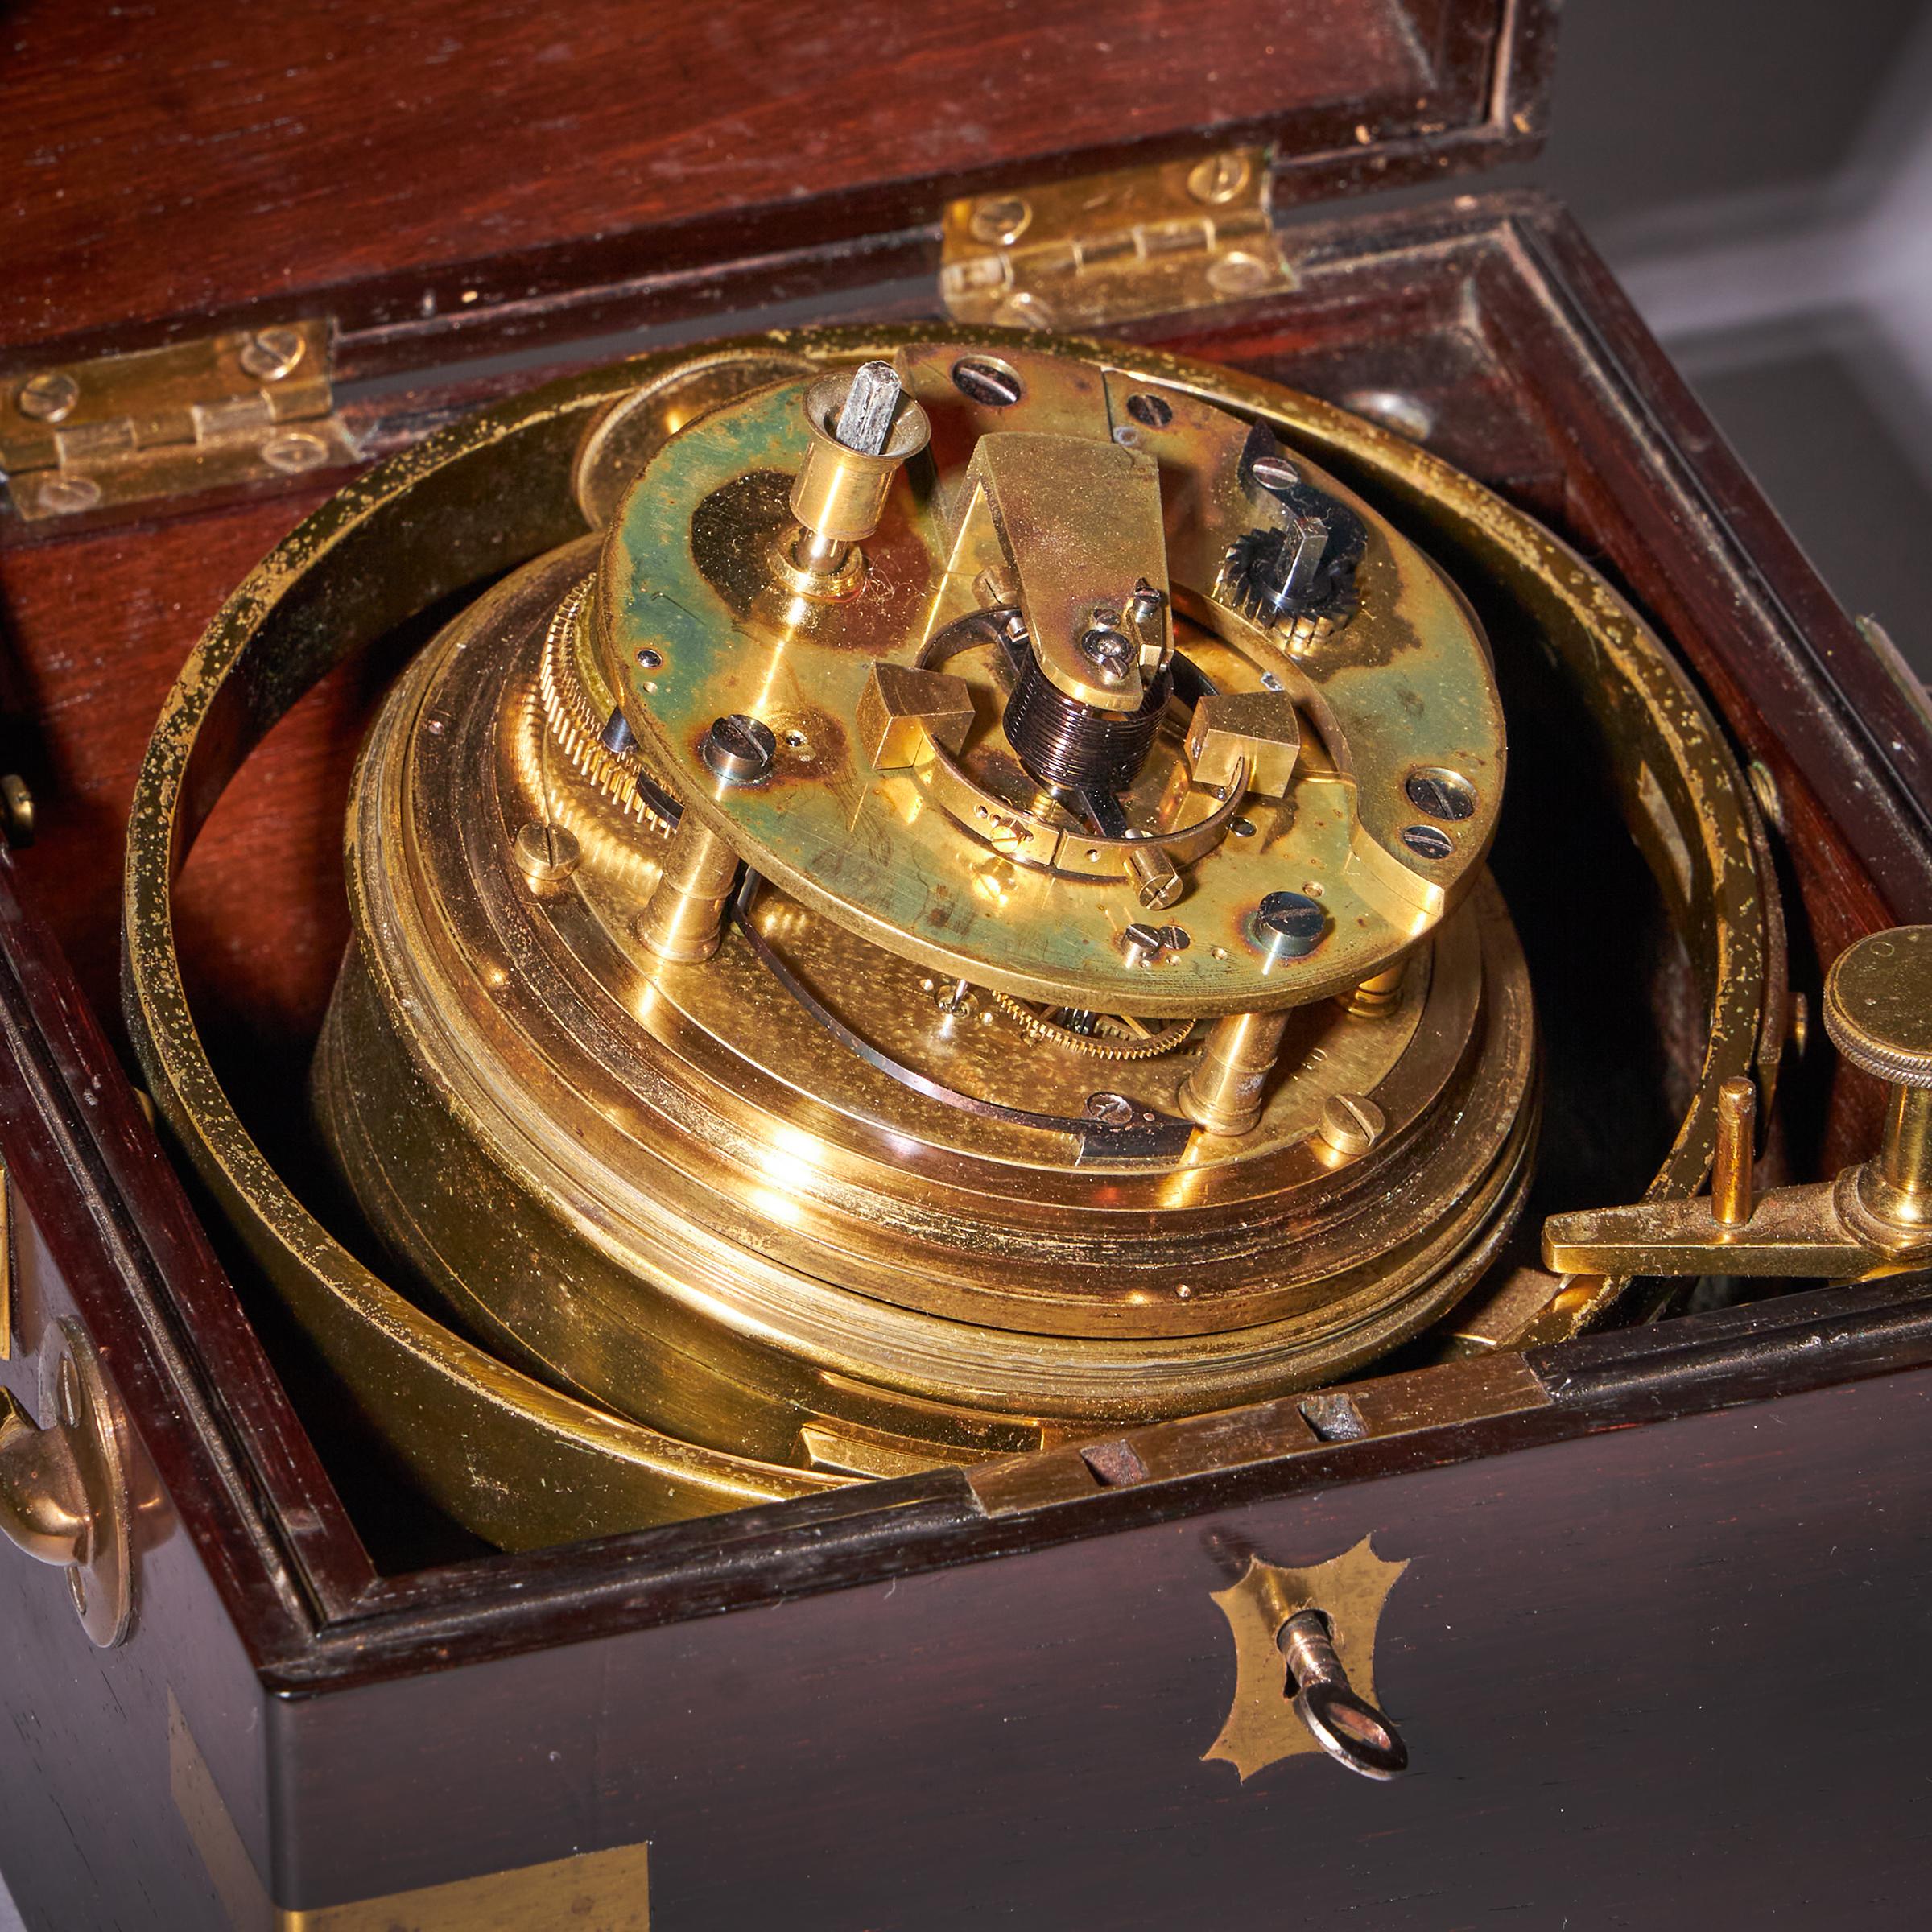 Fine Two-Day Marine Chronometer Signed Charles Frodsham 9